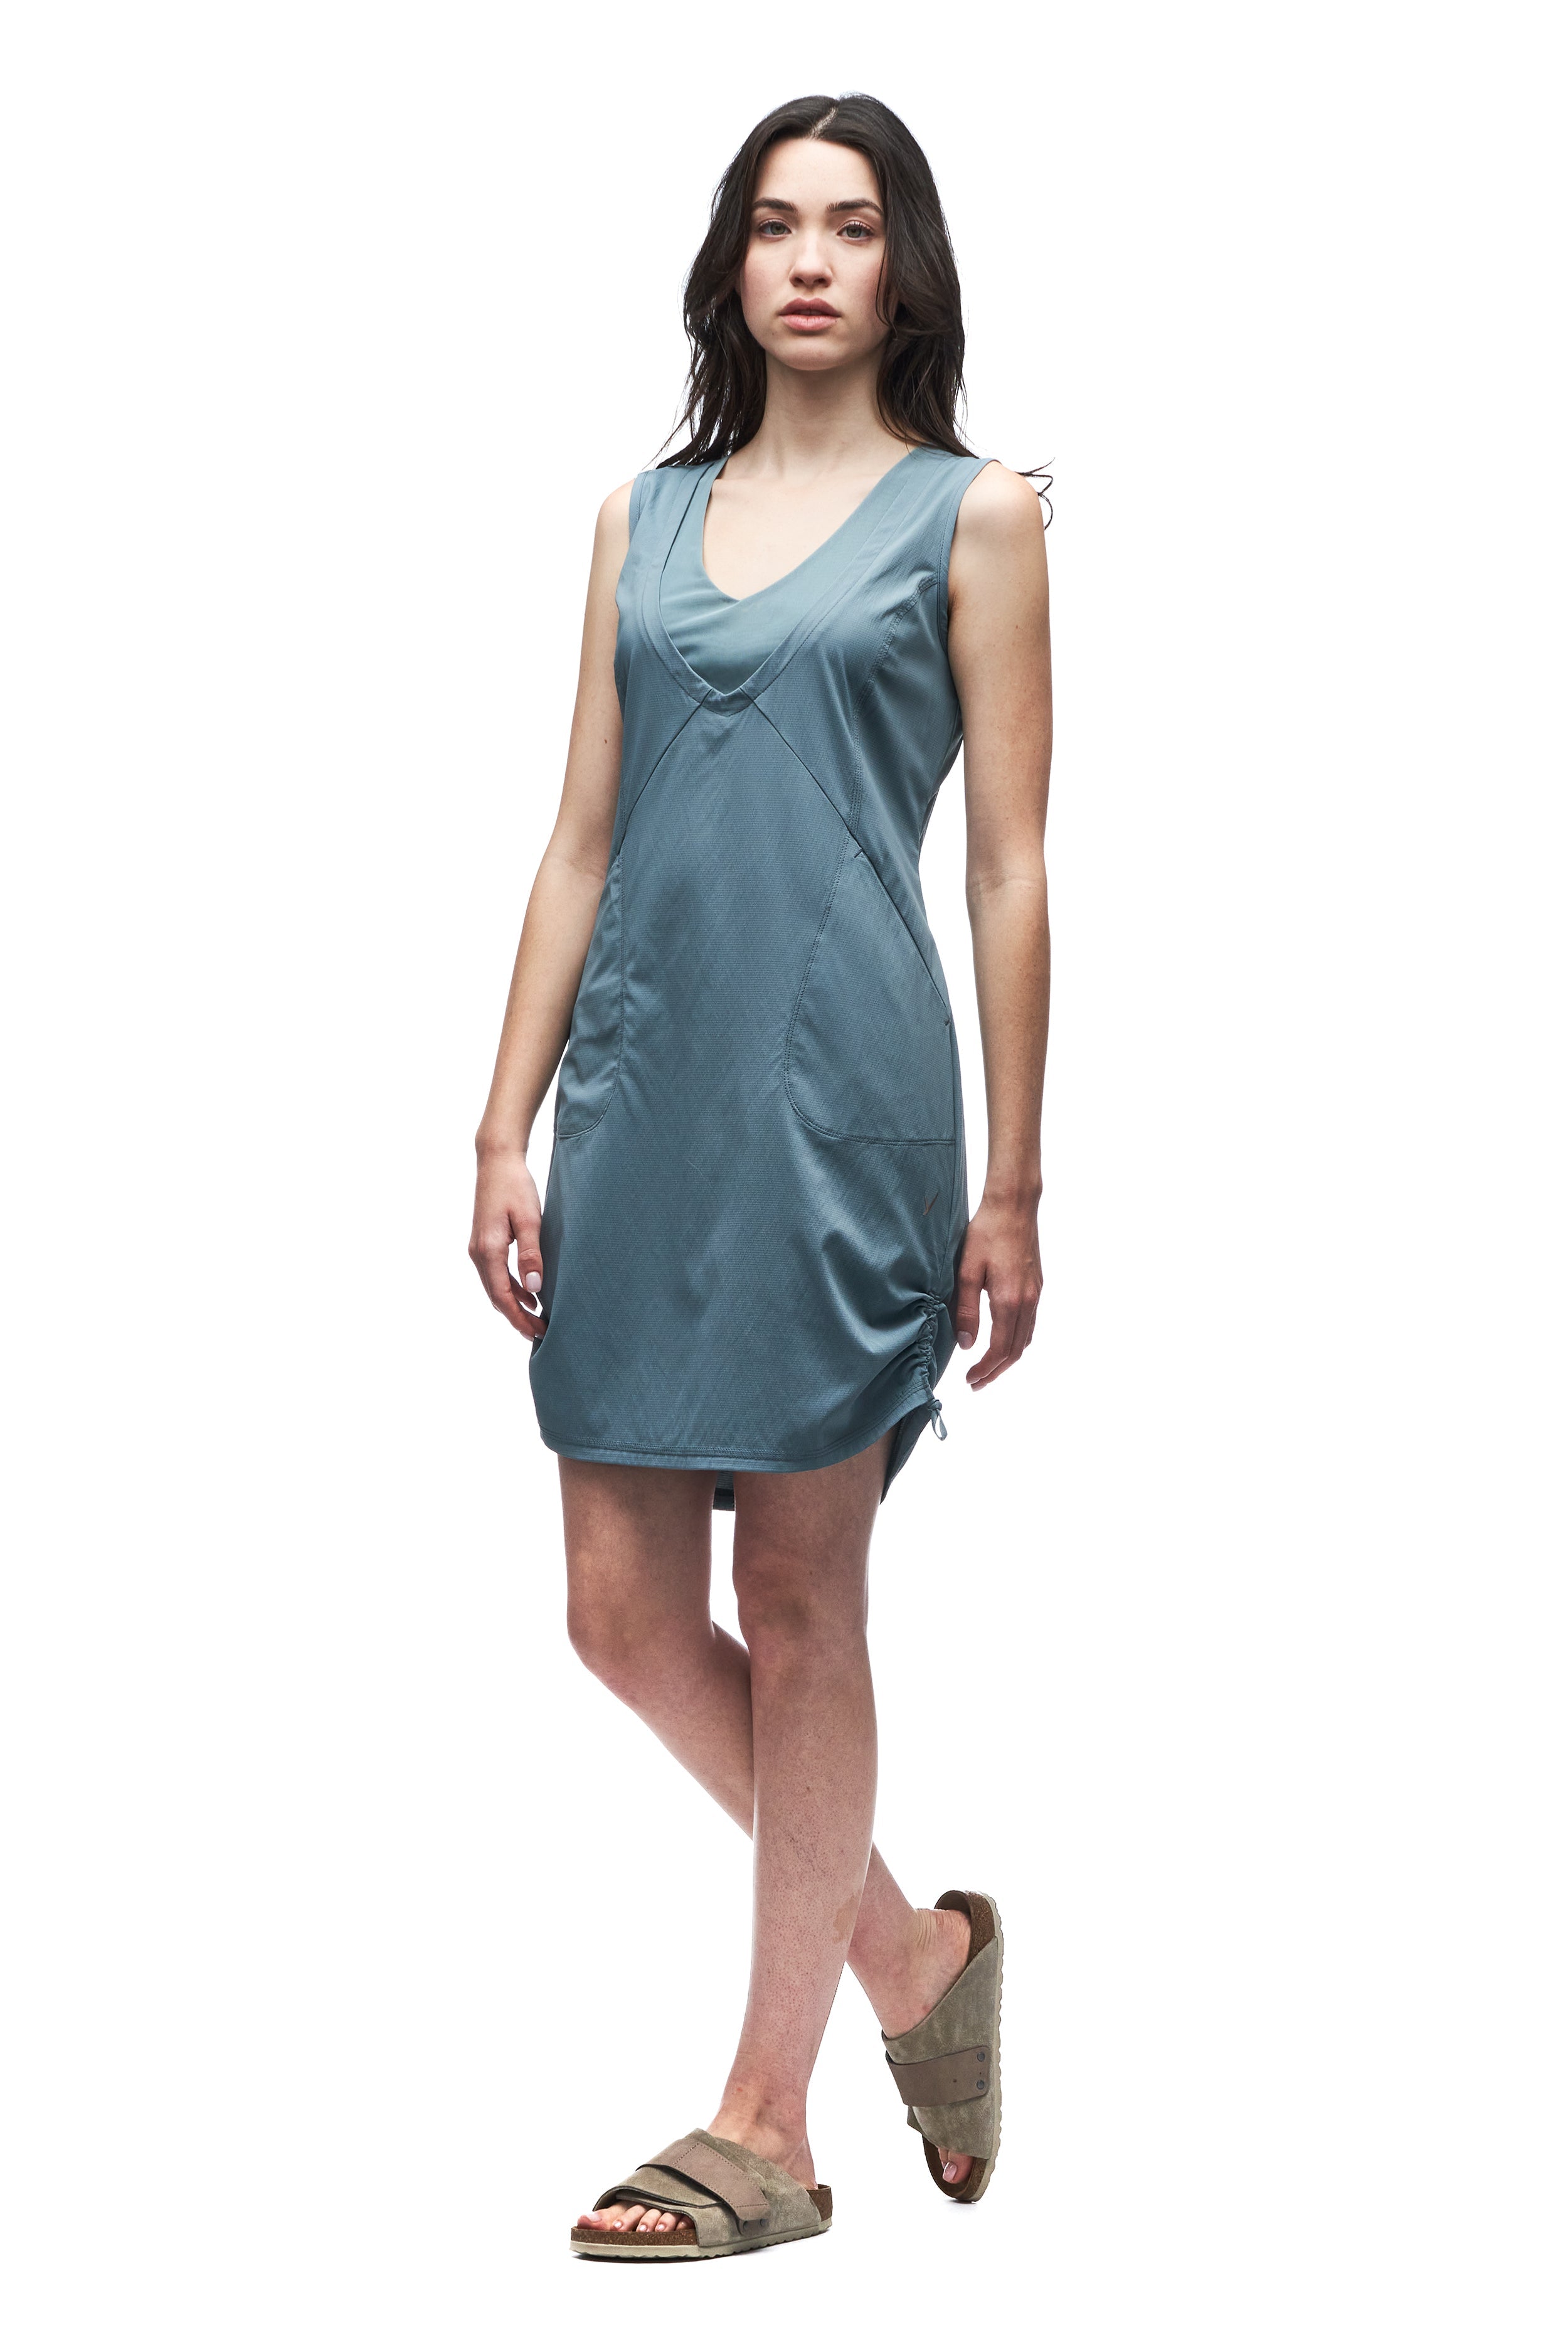 Indyeva Liike IV Dress - Pond Clothing - Dresses + Jumpsuits - Dresses - Short Dresses by Indyeva | Grace the Boutique